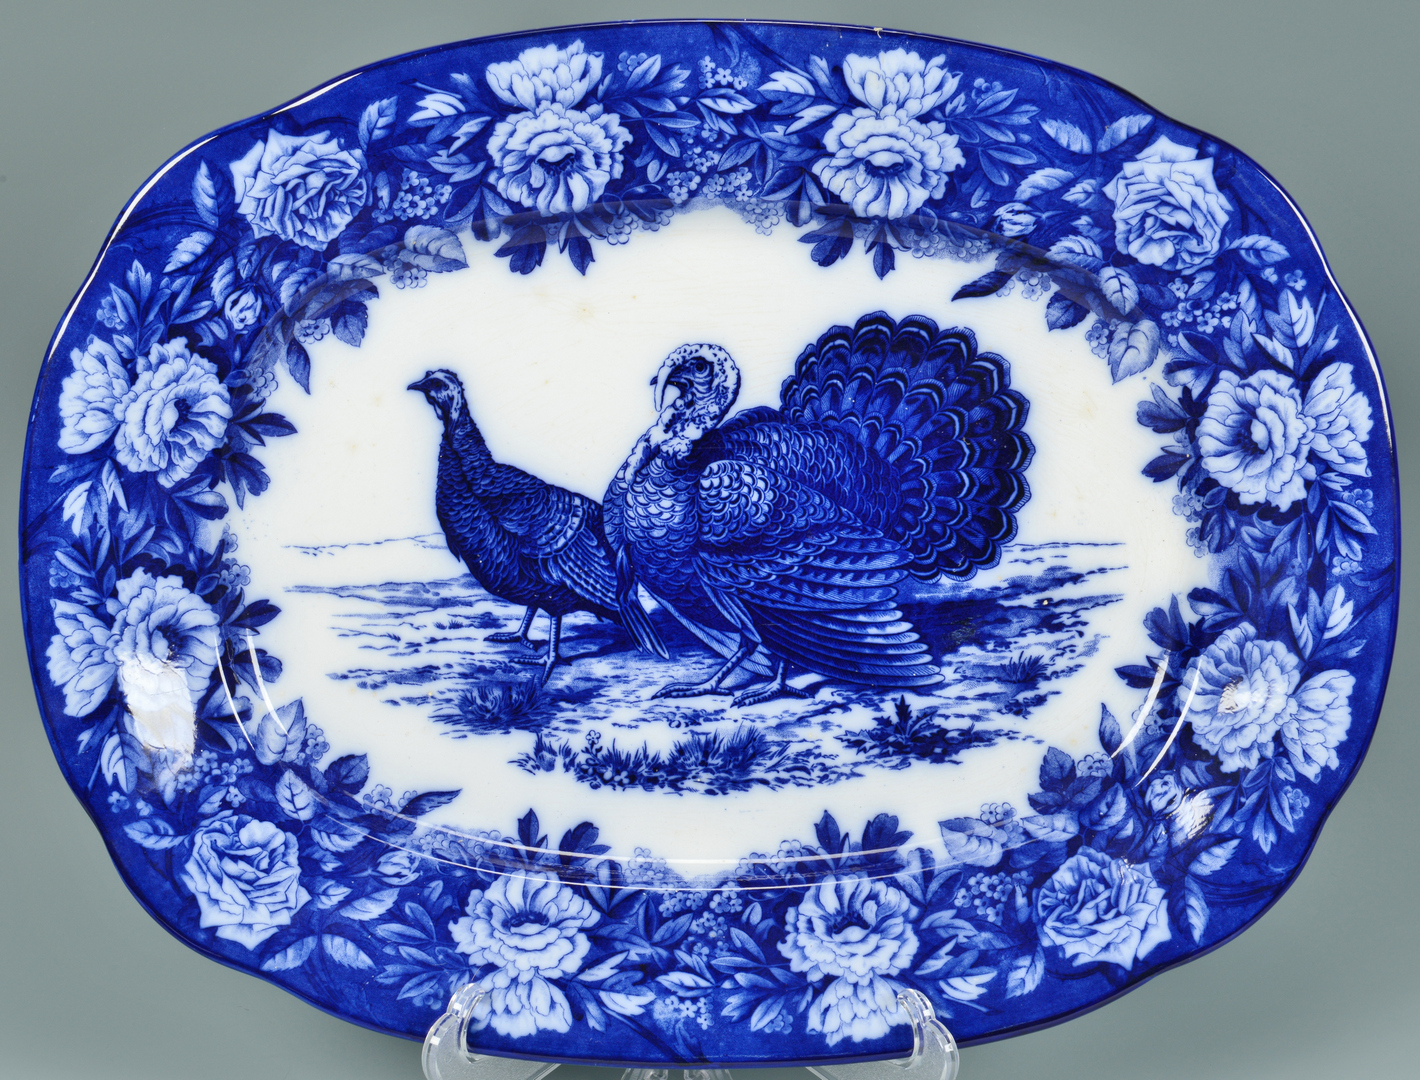 Lot 3088163: Turkey Platter with 12 plates, Flow Blue